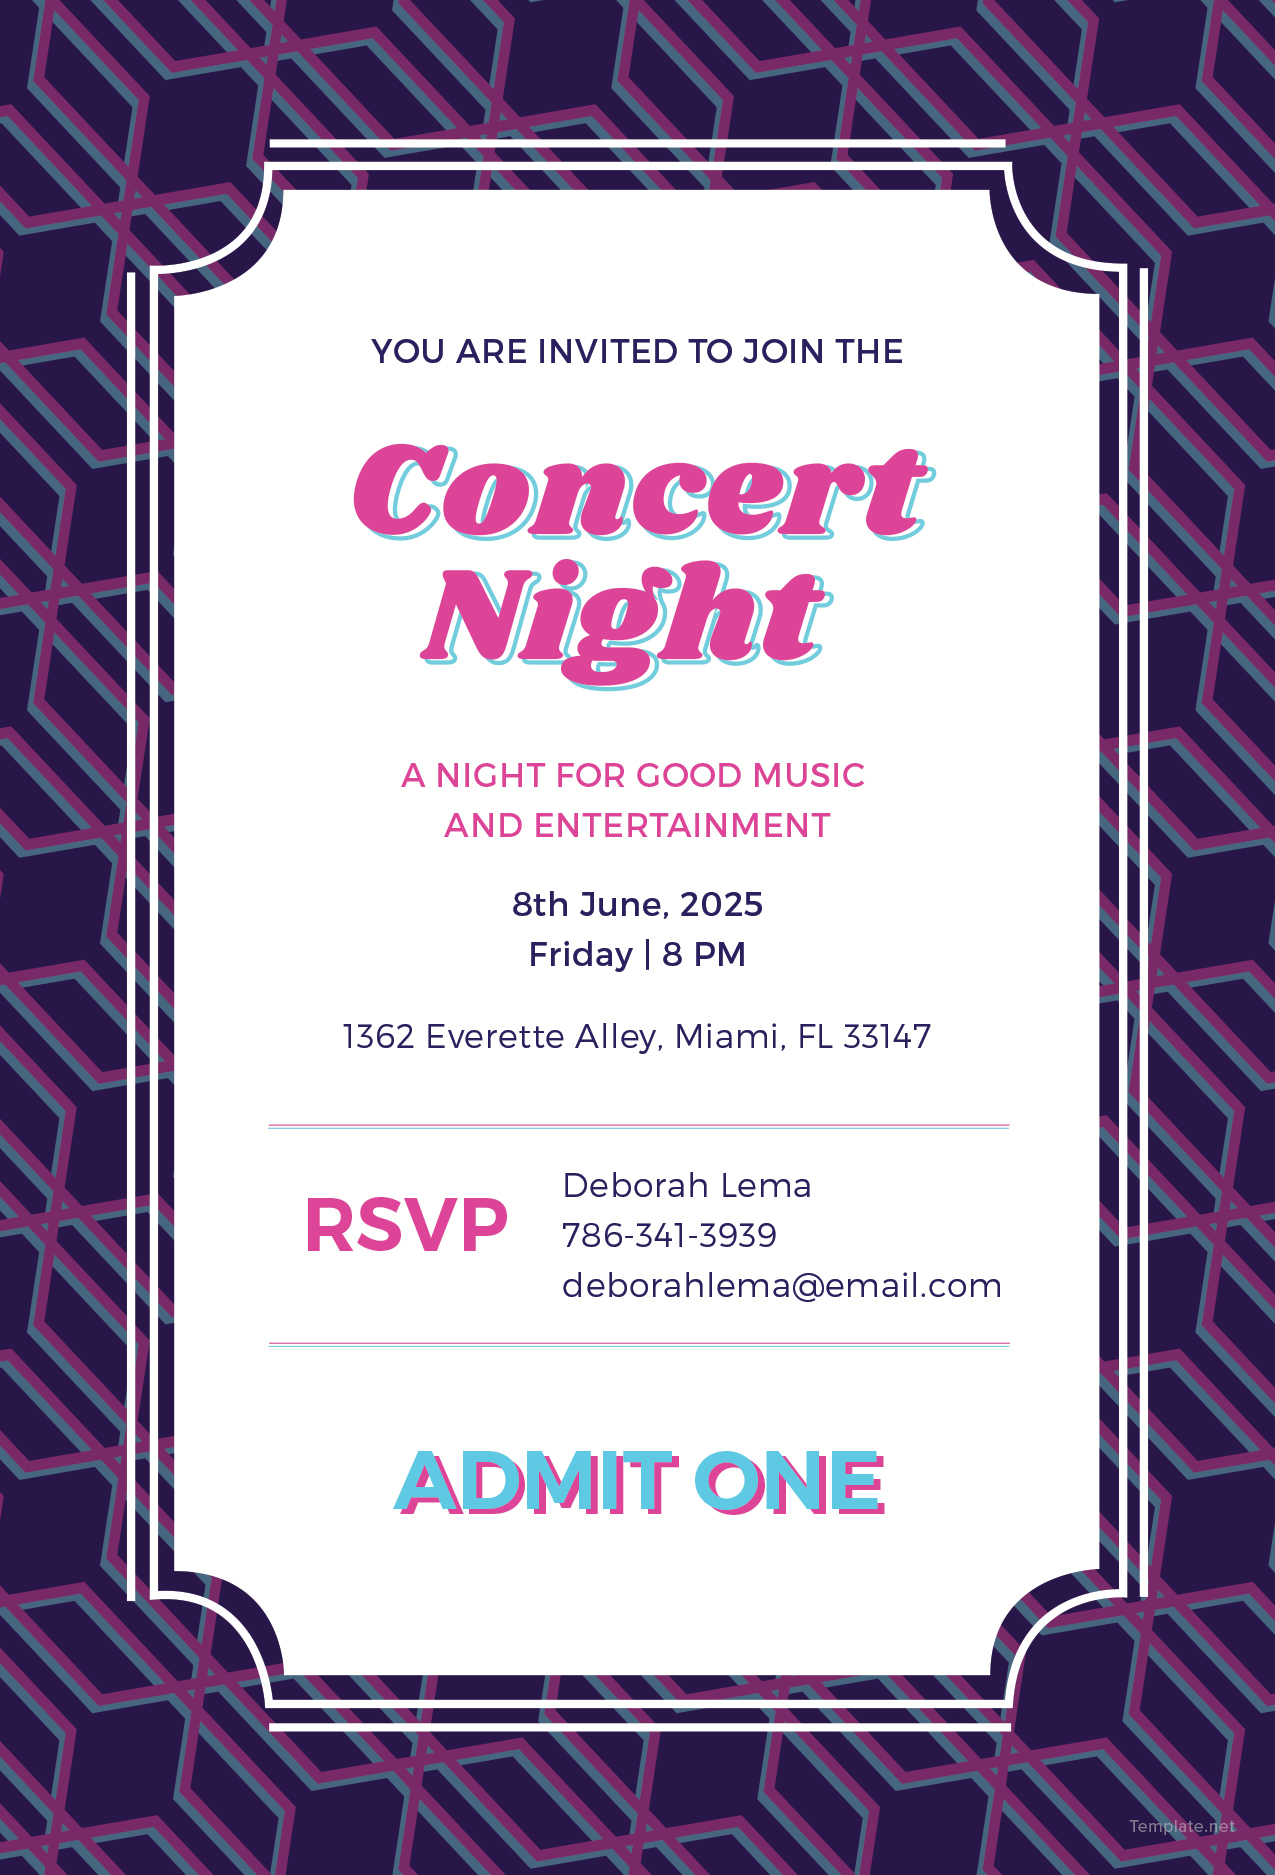 Free Concert Ticket Invitation Template In Adobe Photoshop Illustrator 